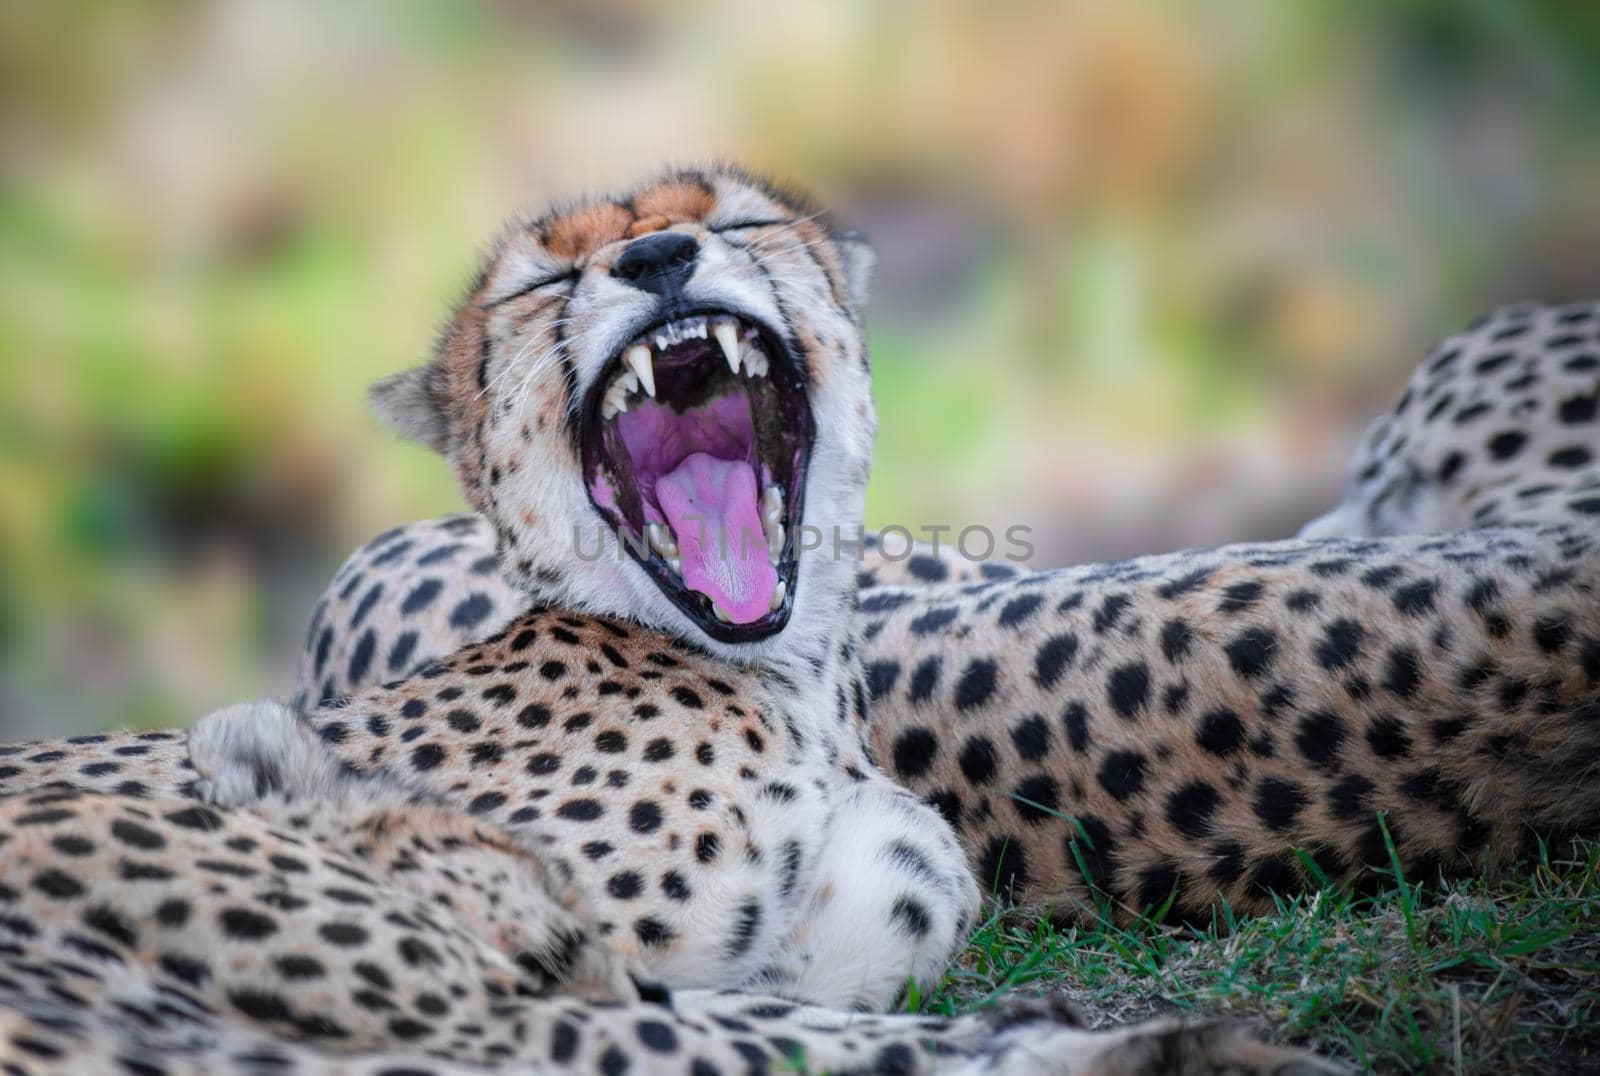 Cheetah yawning in the Savannah of Kenya Africa with selective focus on the animal's ferocious teeth